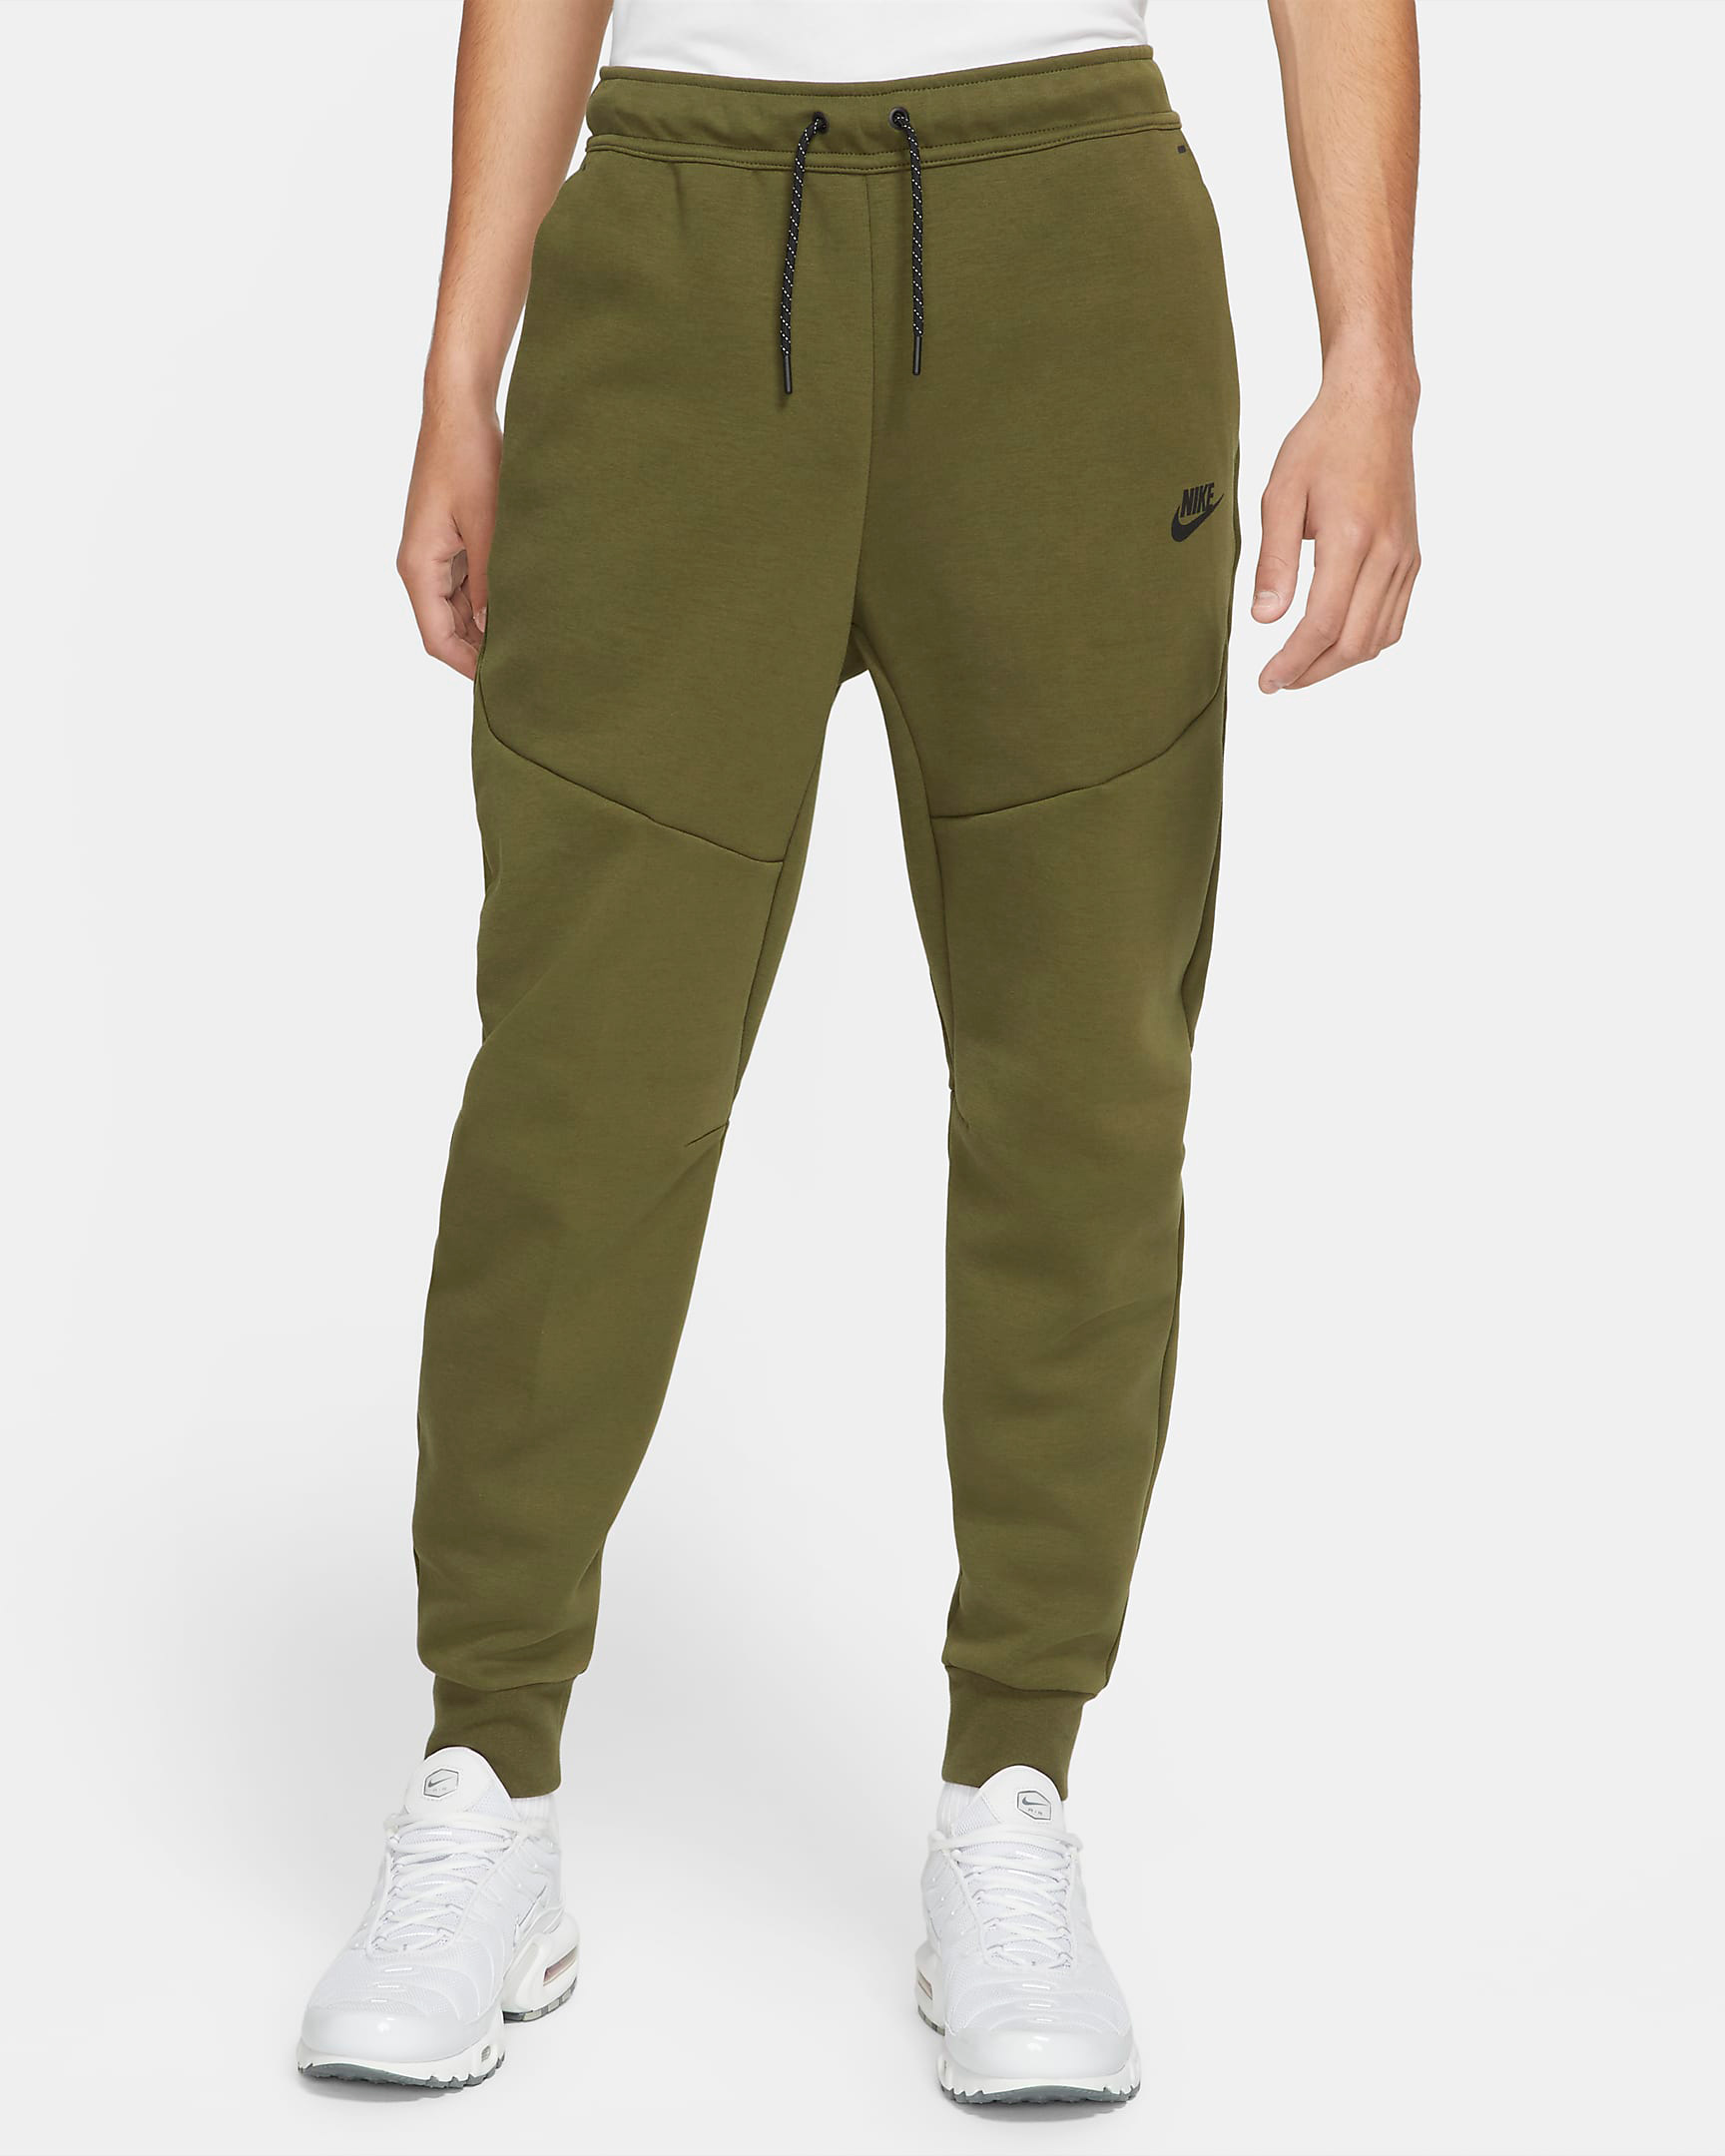 nike-rough-green-tech-fleece-joggers-pants-1